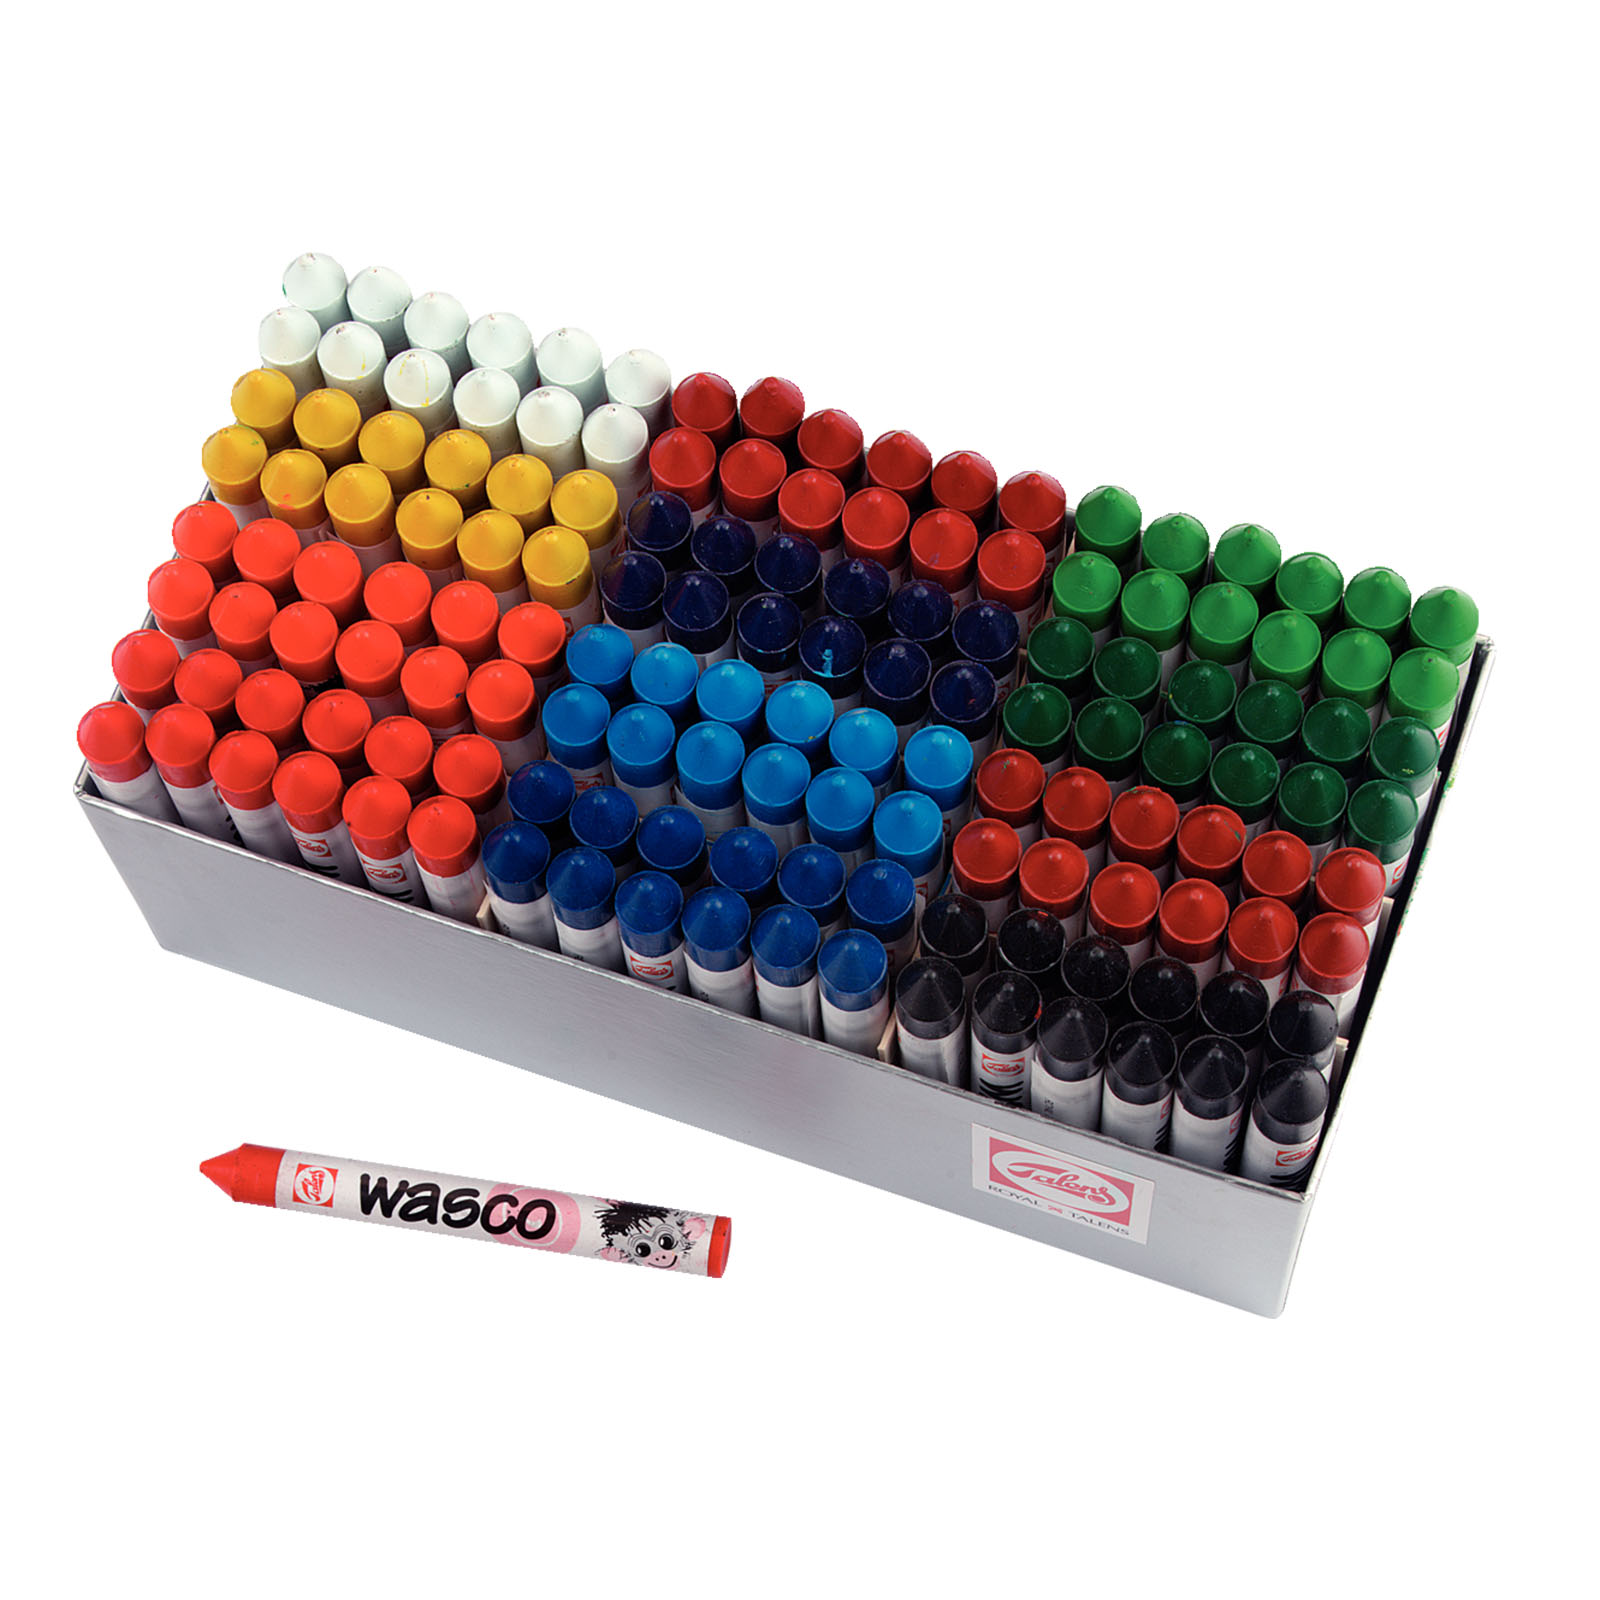 Talens • Wasco Wax Crayons Large Pack 144pcs